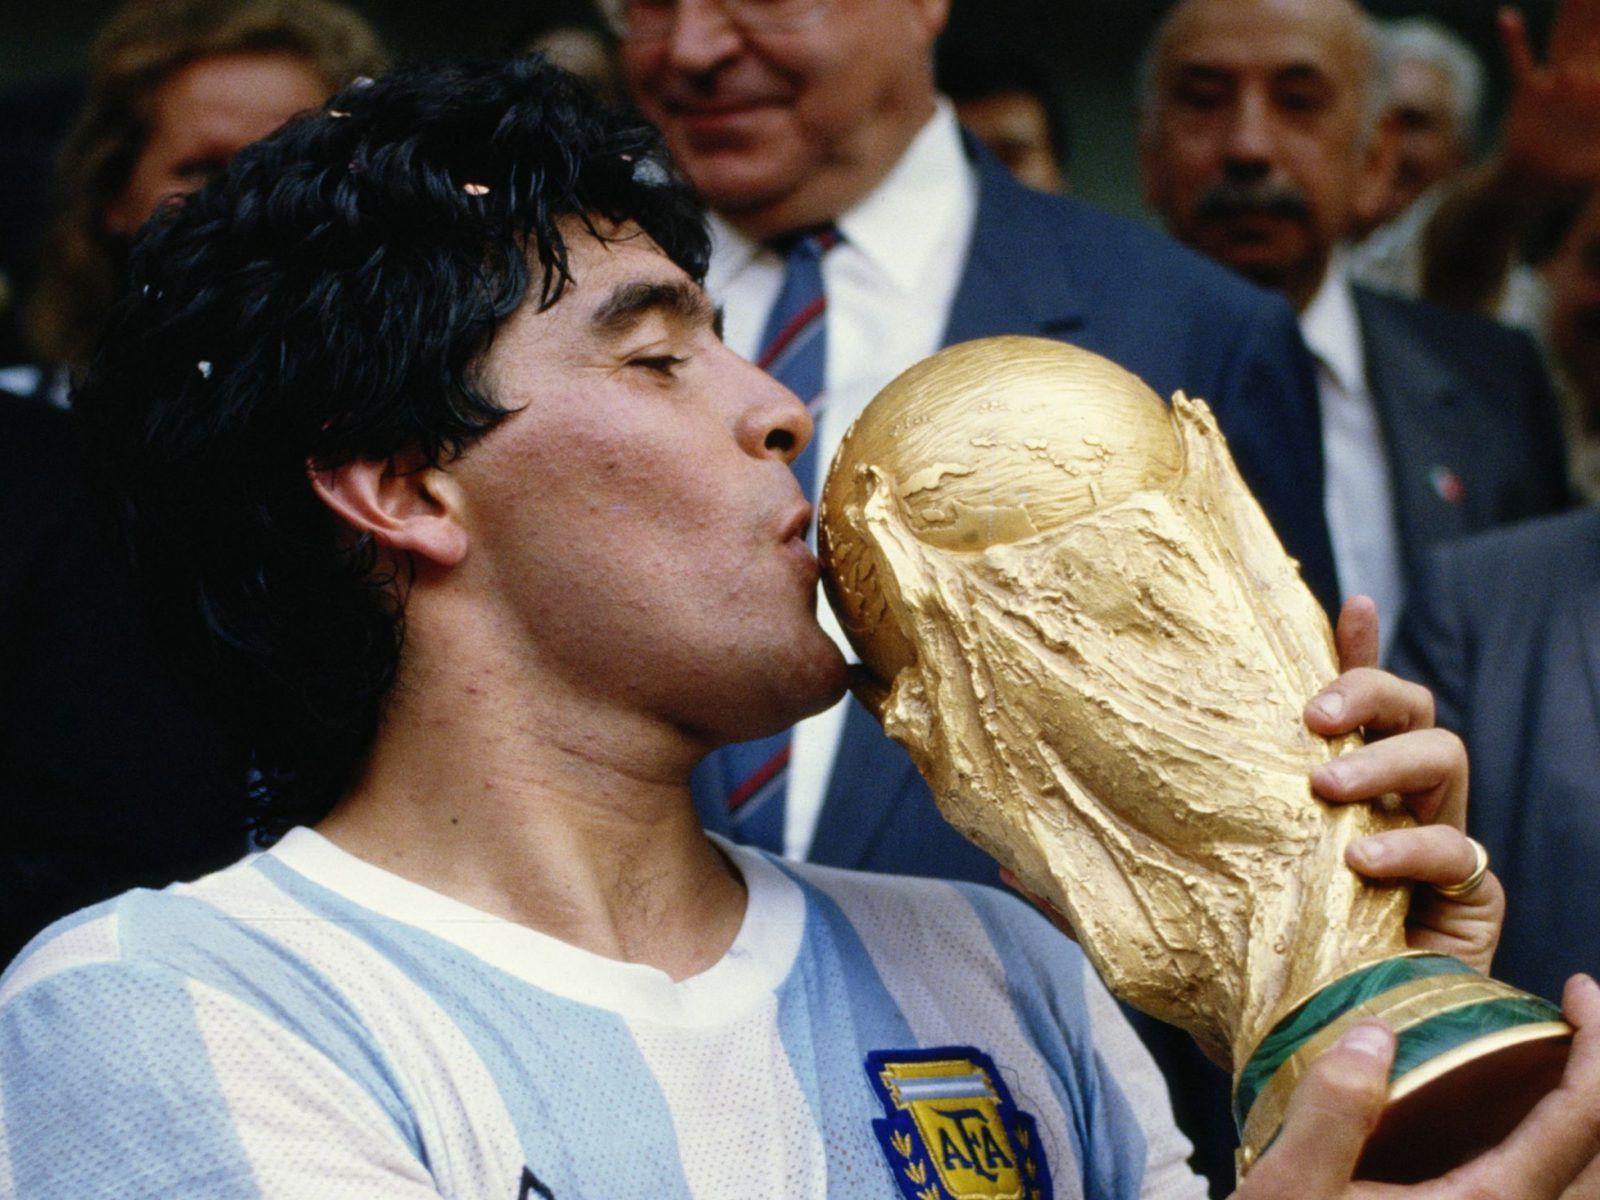 Diego Maradona HD Wallpapers